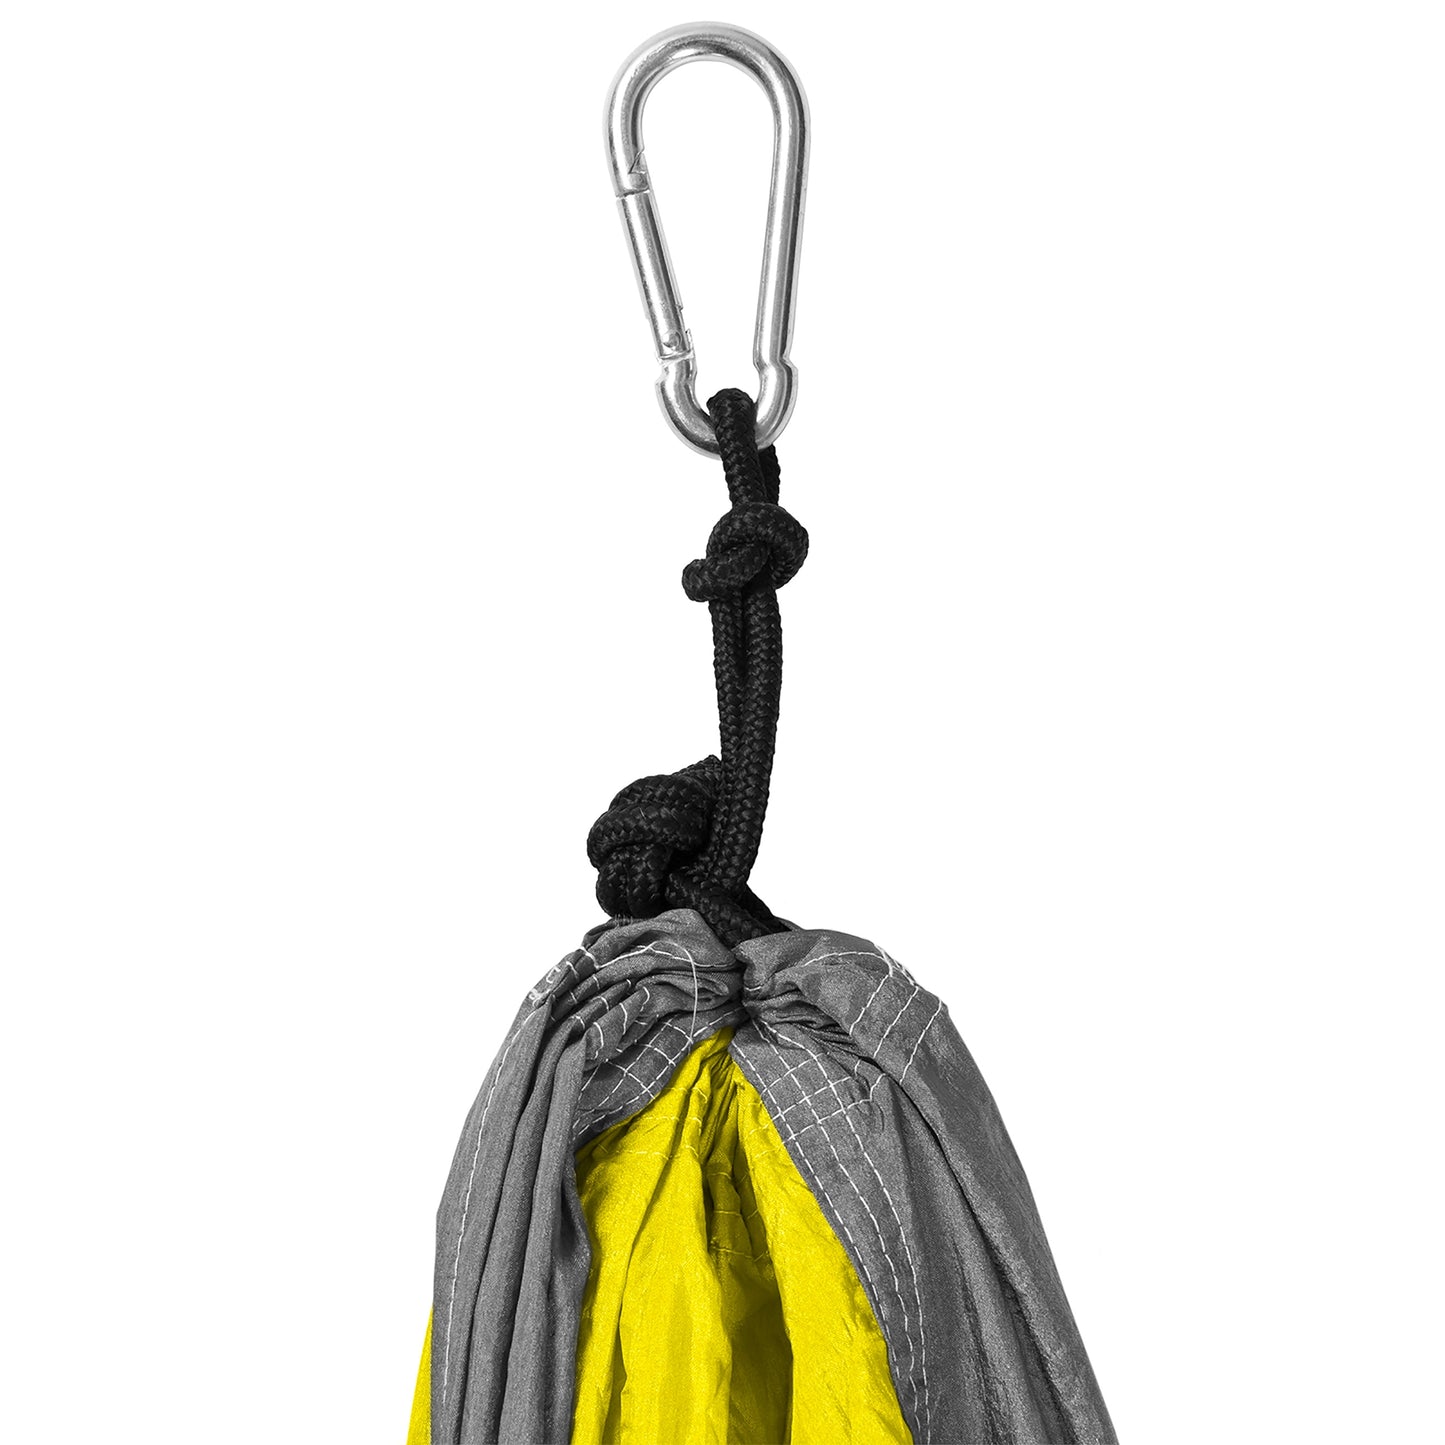 Portable Nylon Parachute Hammock